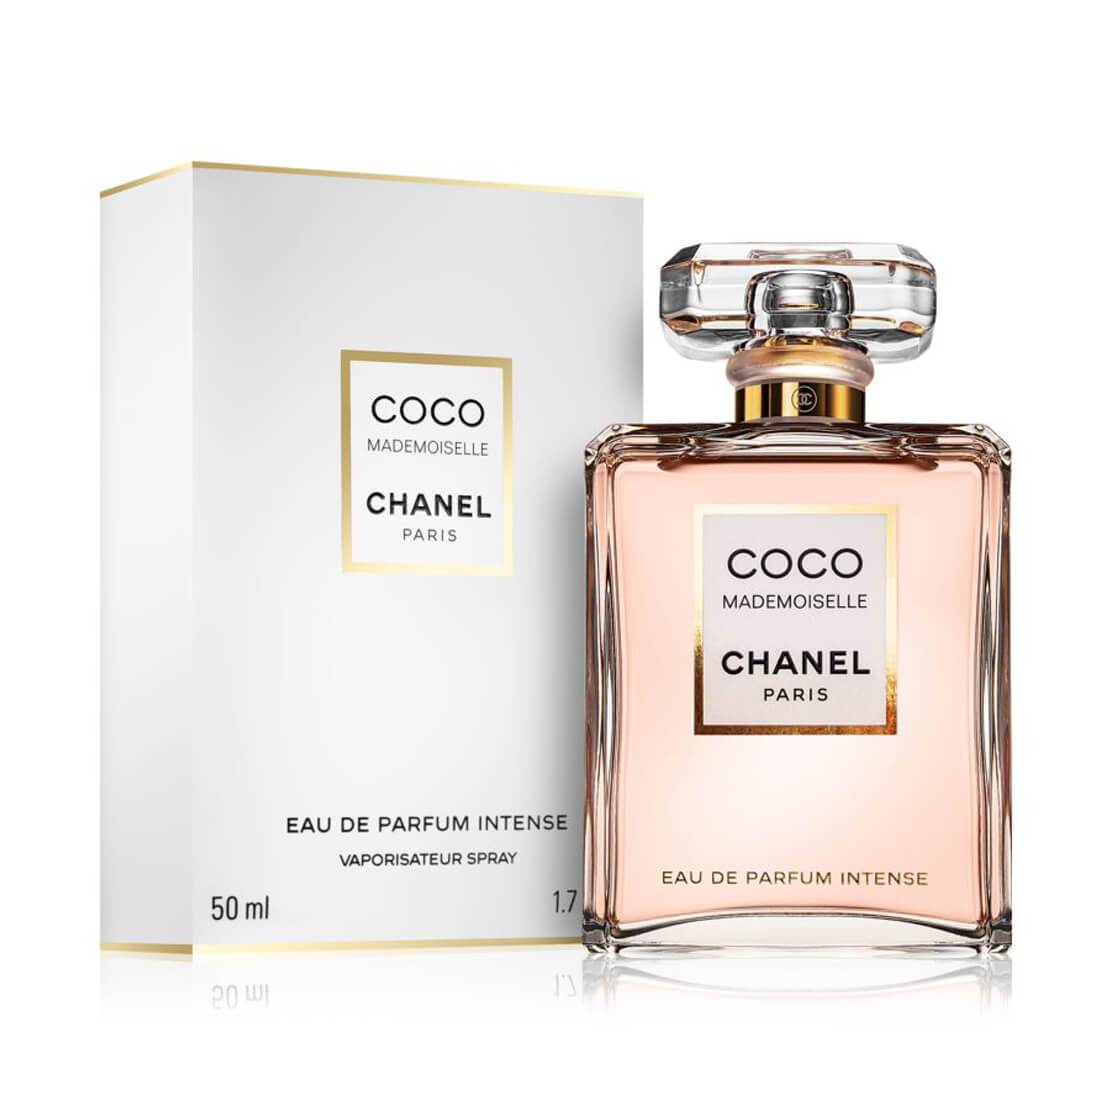 Chanel Coco Mademoiselle EDP INTENSE 50ml Perfume For Women